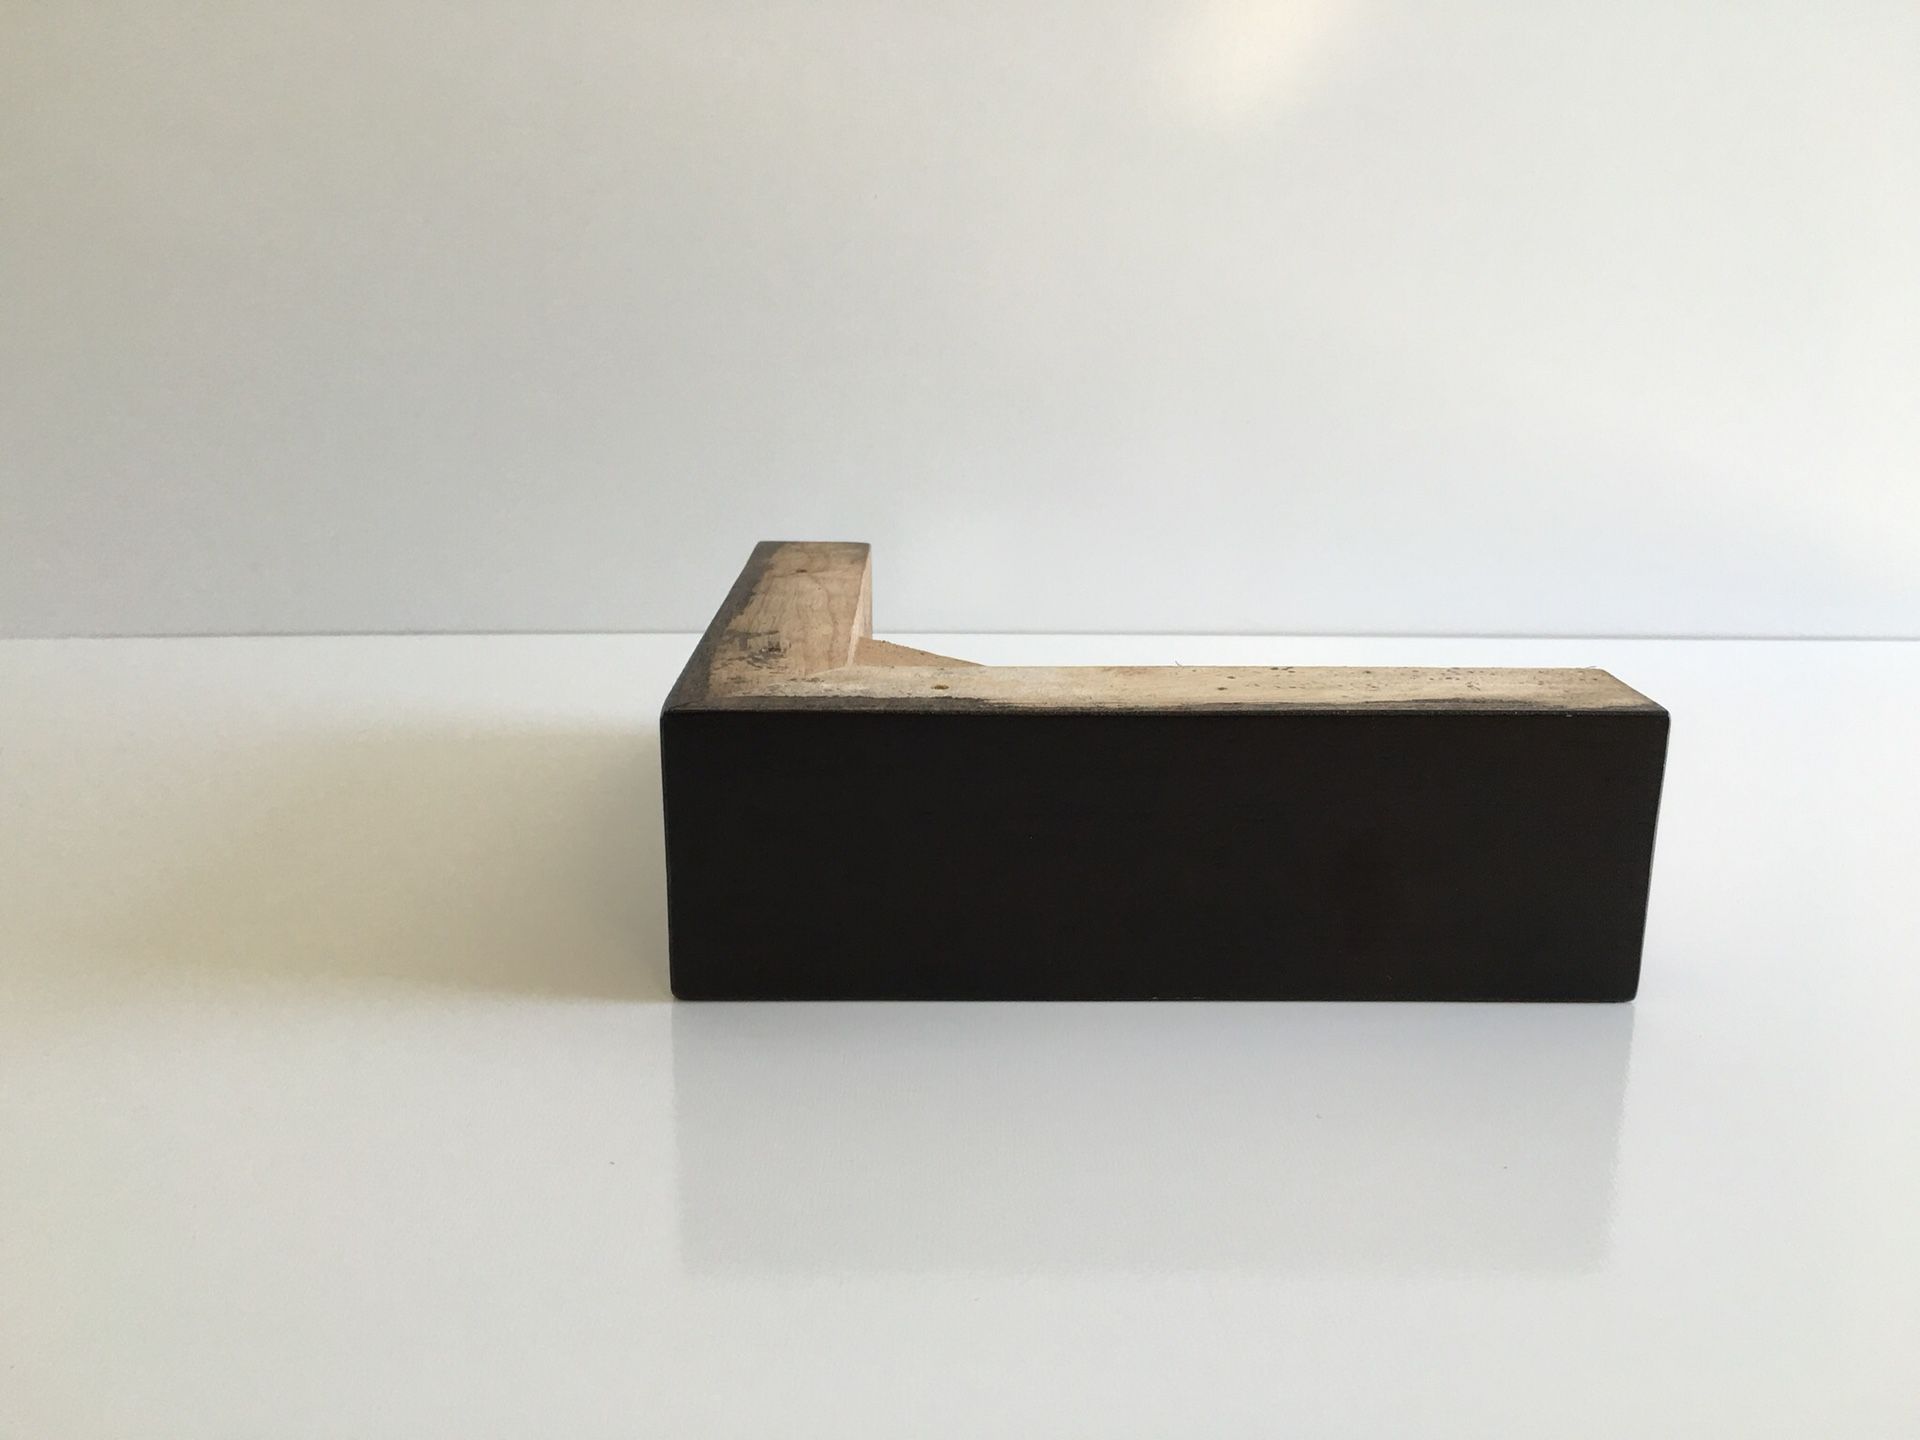 8” L shape wooden sofa legs (set of 4)